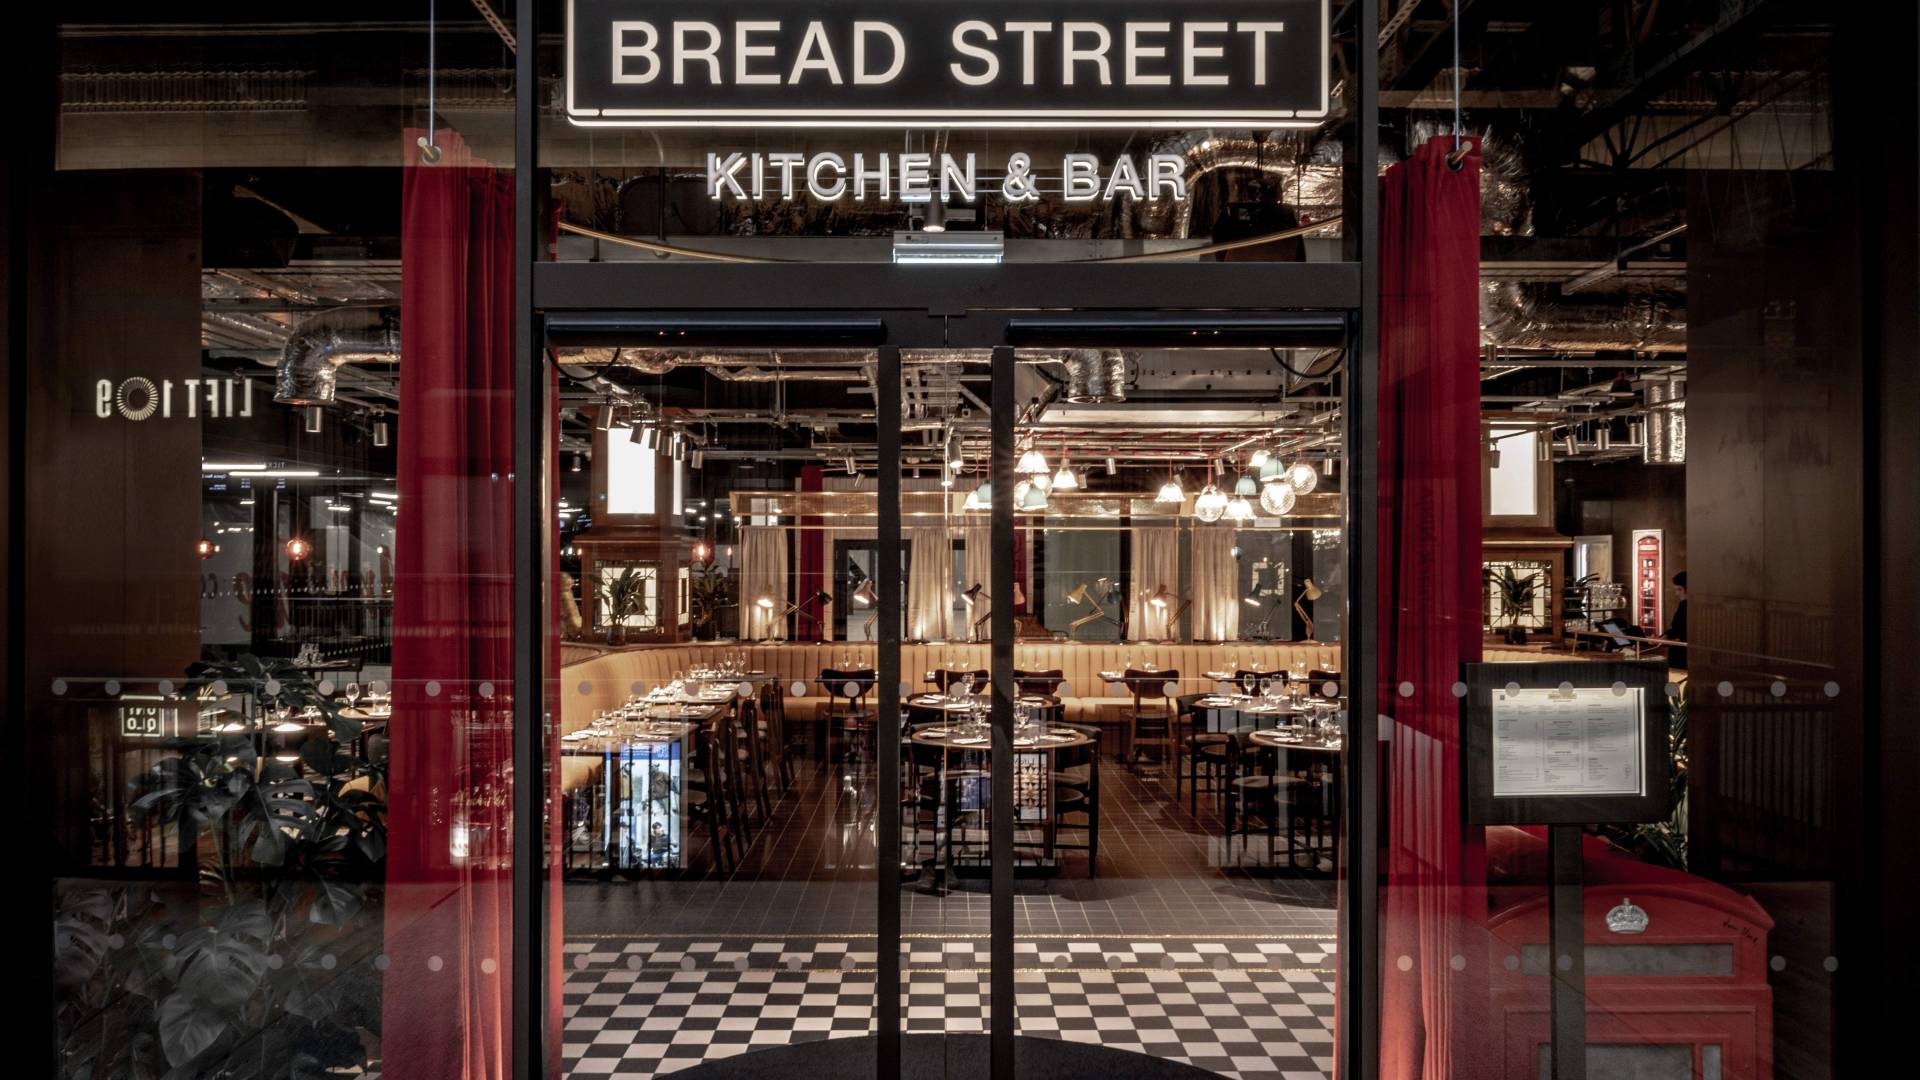 Gordon Ramsay Bread Street Kitchen & Bar, Battersea wedding venue